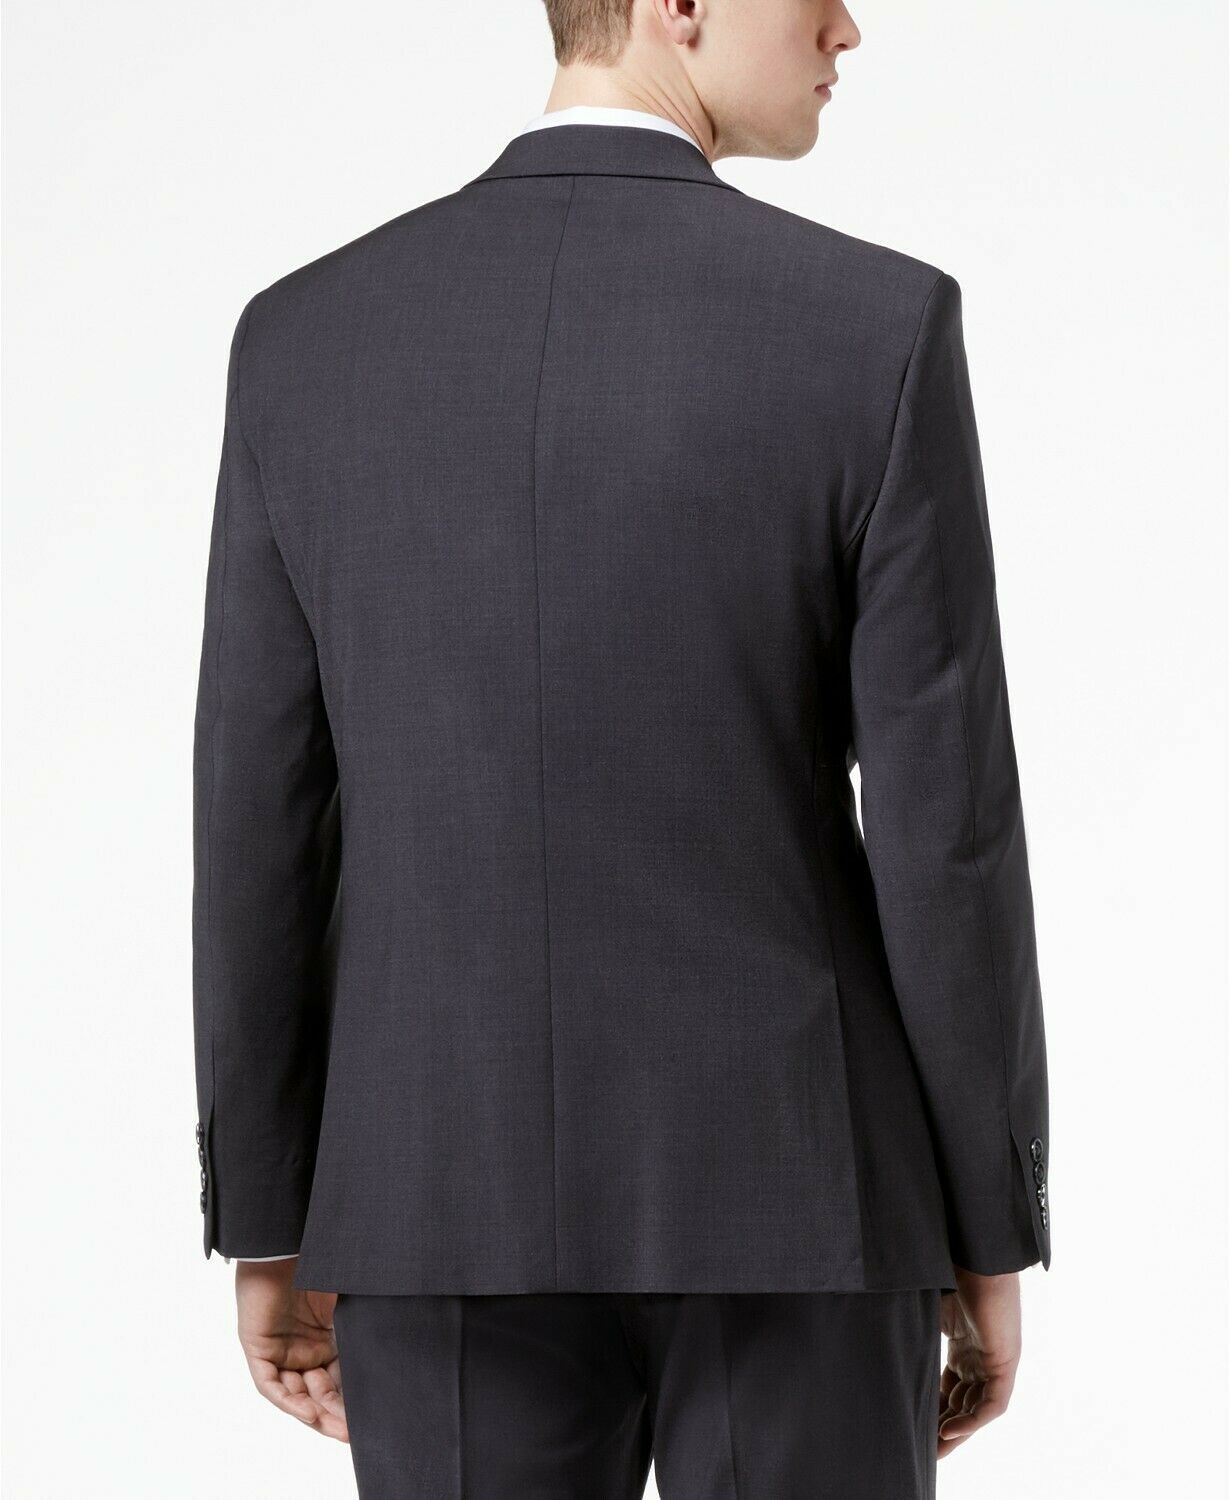 Calvin Klein Mens X-Fit Solid Slim Fit Suit Jacket 40R Charcoal Grey